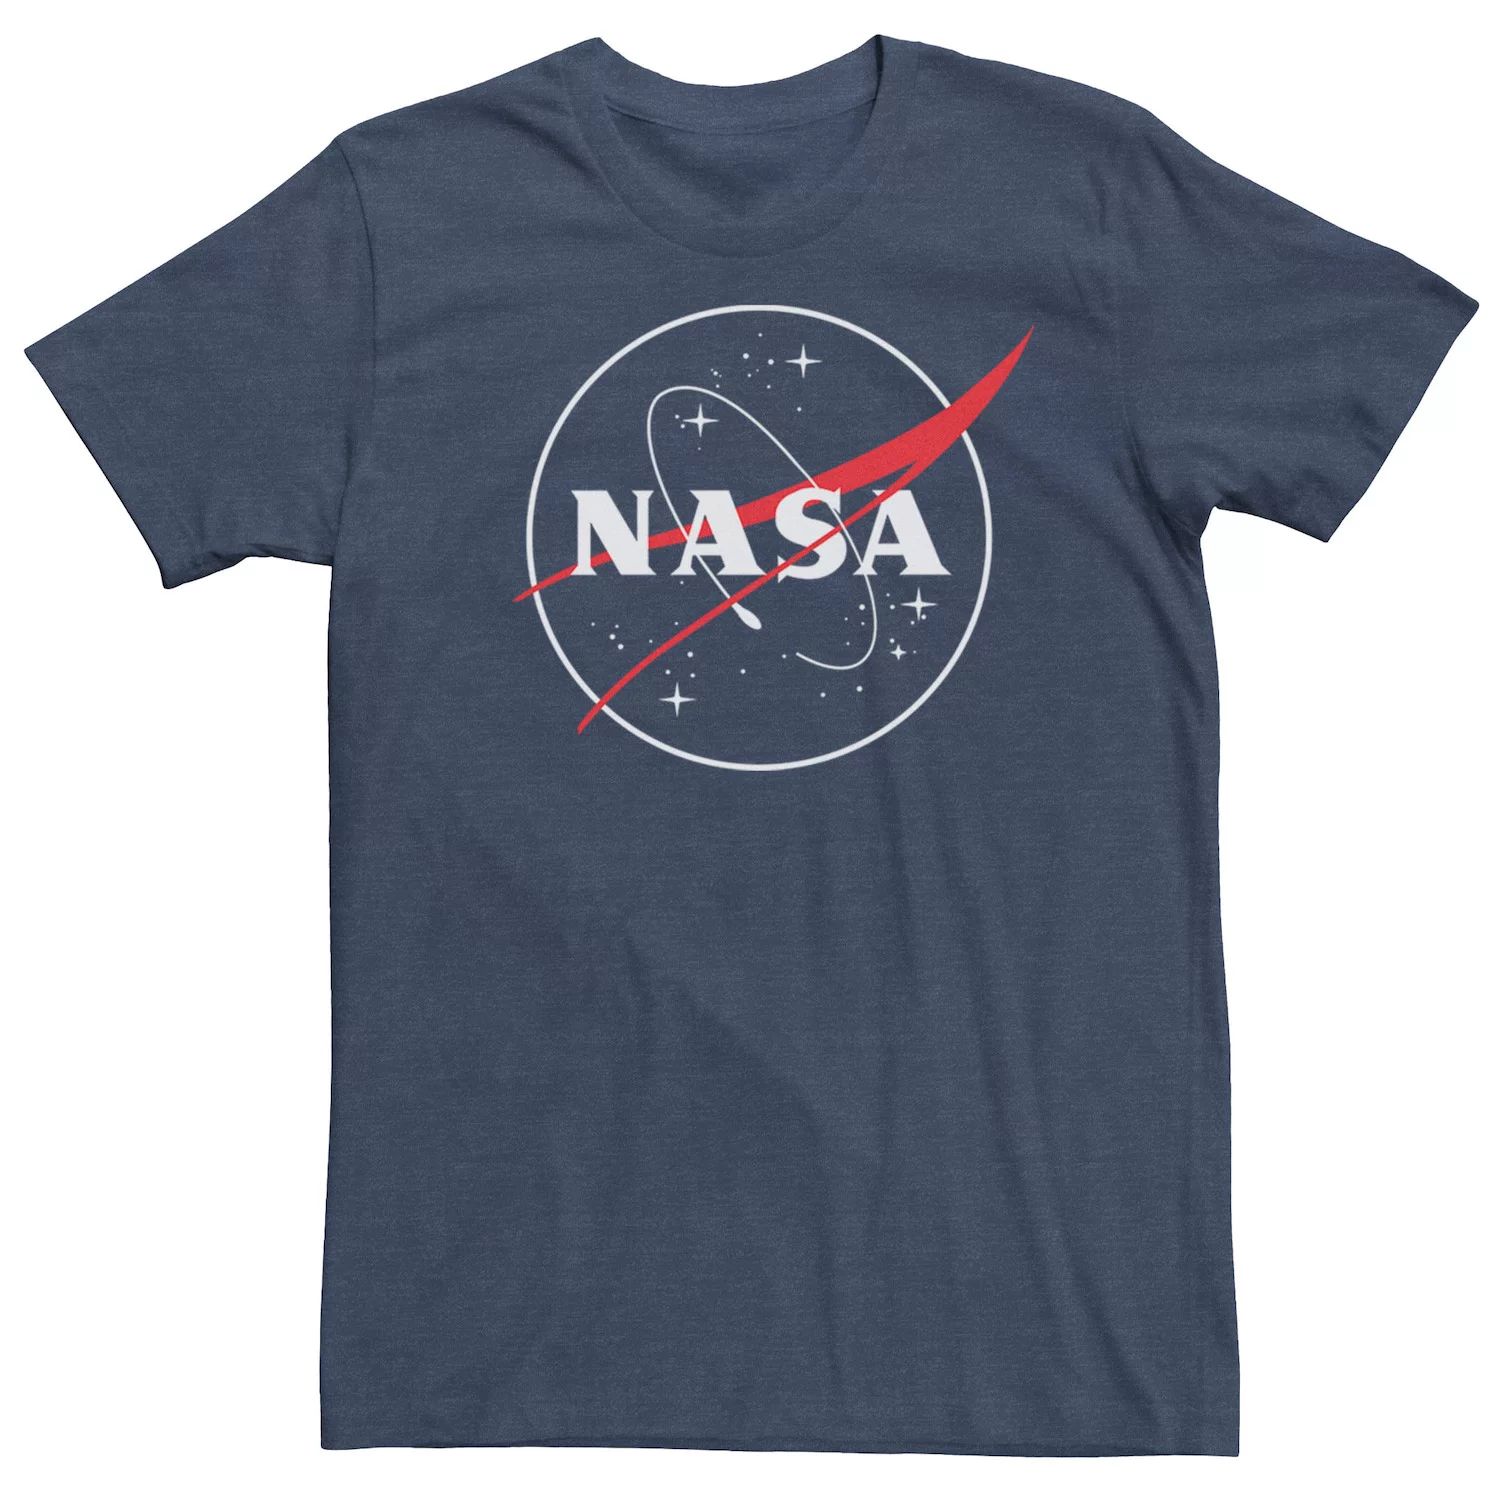 Мужская футболка NASA Outline с простым логотипом Licensed Character